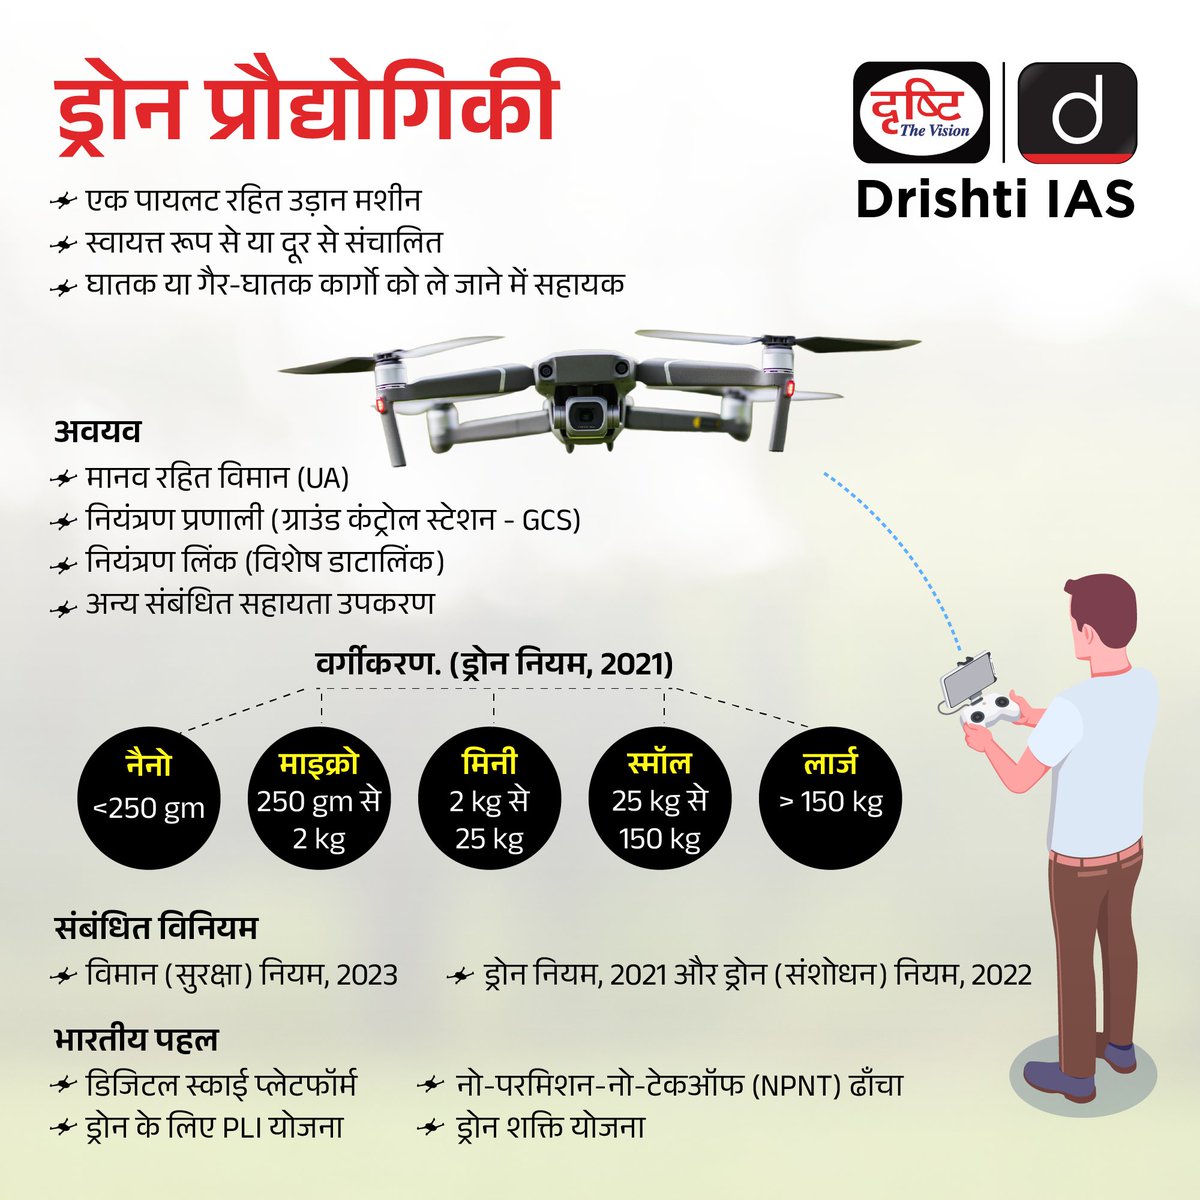 ड्रोन प्रौद्योगिकी
.
#DroneTechnology #Drone #unpiloted #aircraft #unmanned #UAVs #crafts #range #military #operations #ultradangerous #robot #aerospace #robotic #LiDAR #detectors #Wing #GroundControlStation #infographics #drishtiiasinfographics #drishtiias #drishtipcs